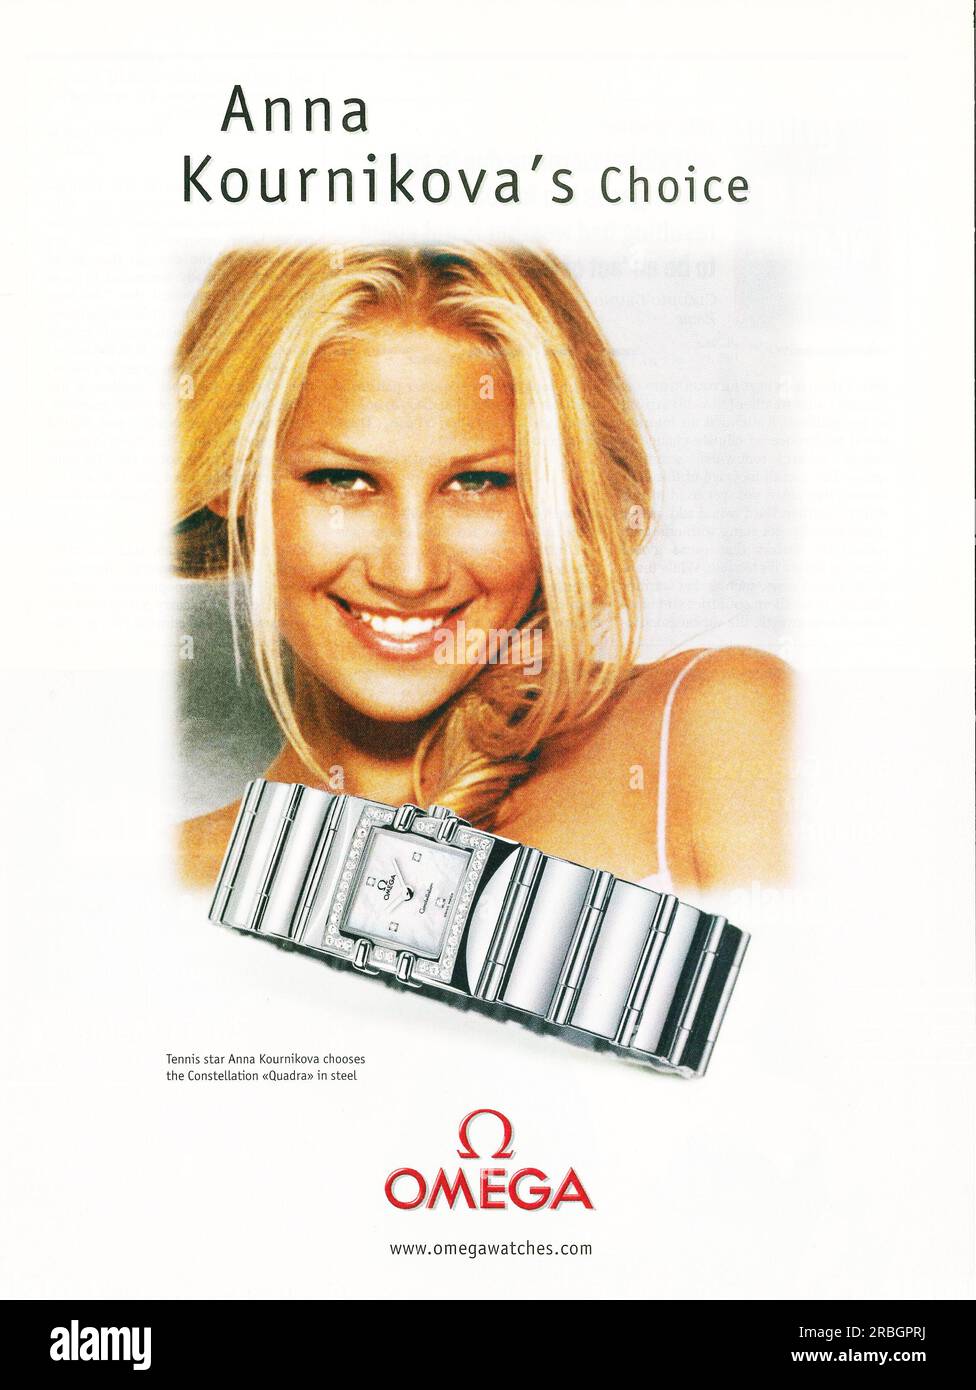 Omega Constellation Quadra watch in stainless steel advert with Anna Kournikova in a magazine 2000 Stock Photo